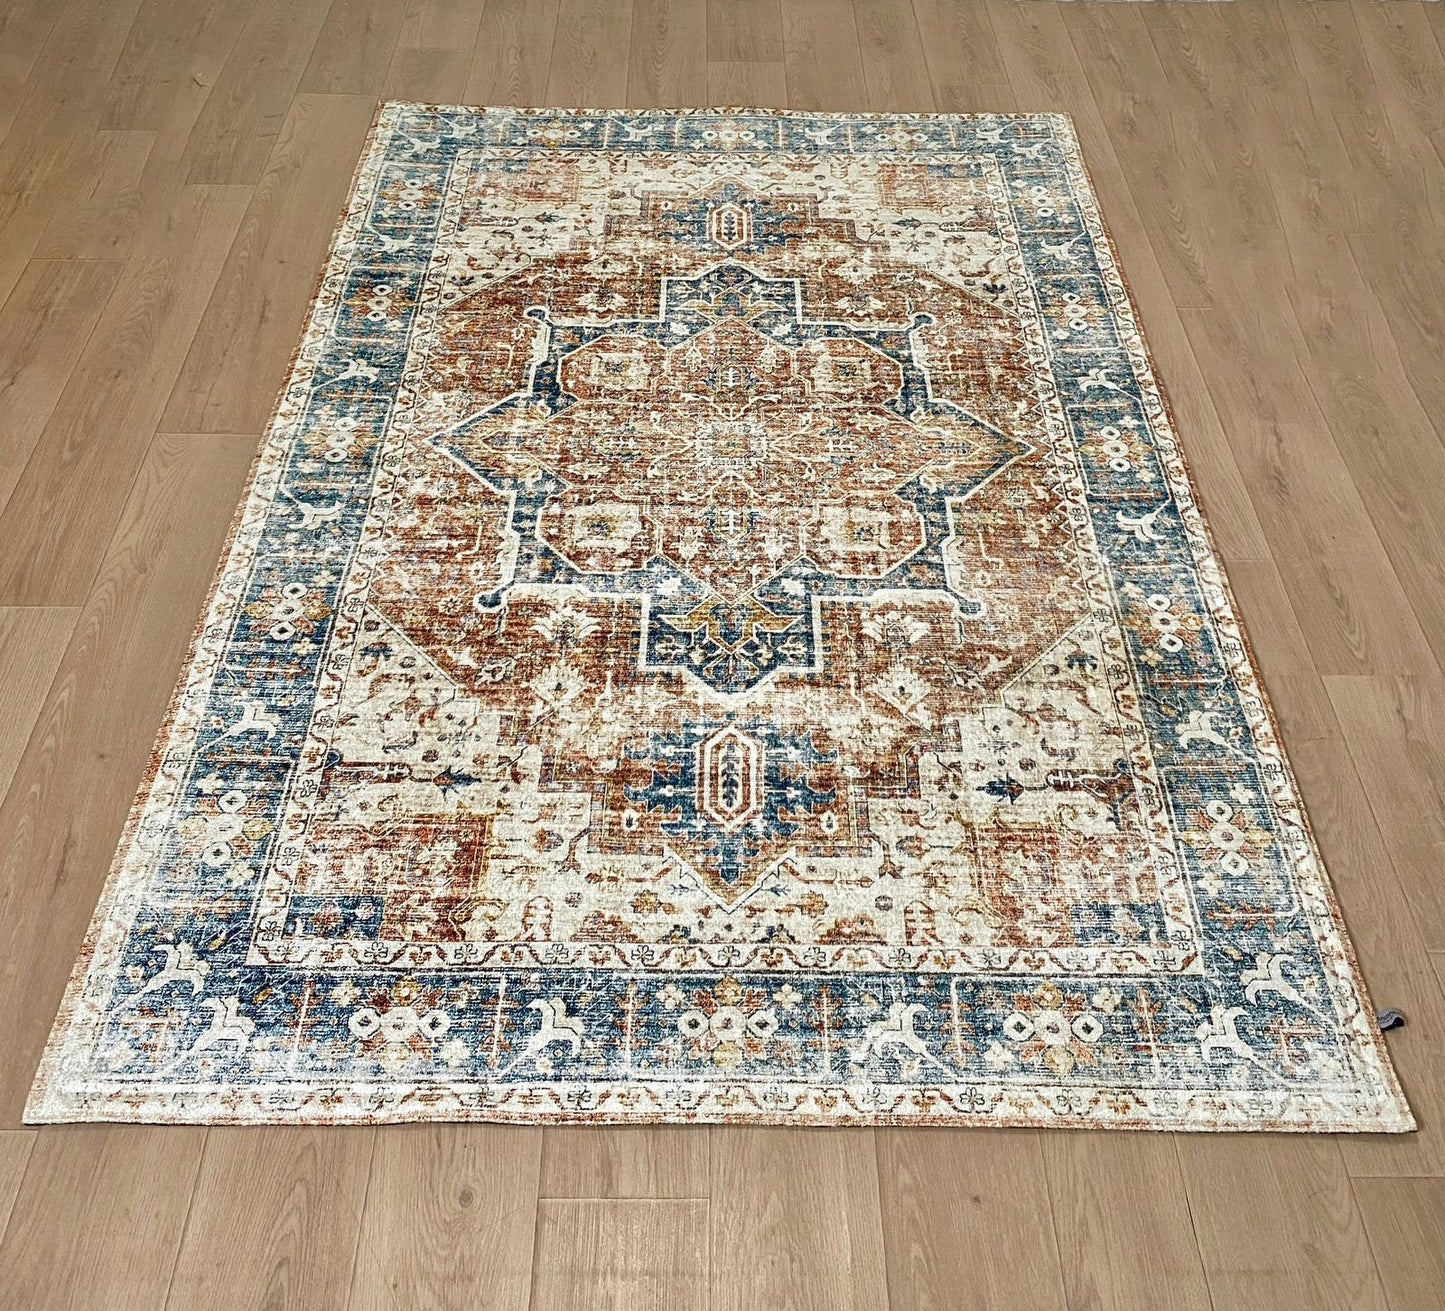 Karpet Tradisional (BR-T-0037) - Brown,Blue,Grey